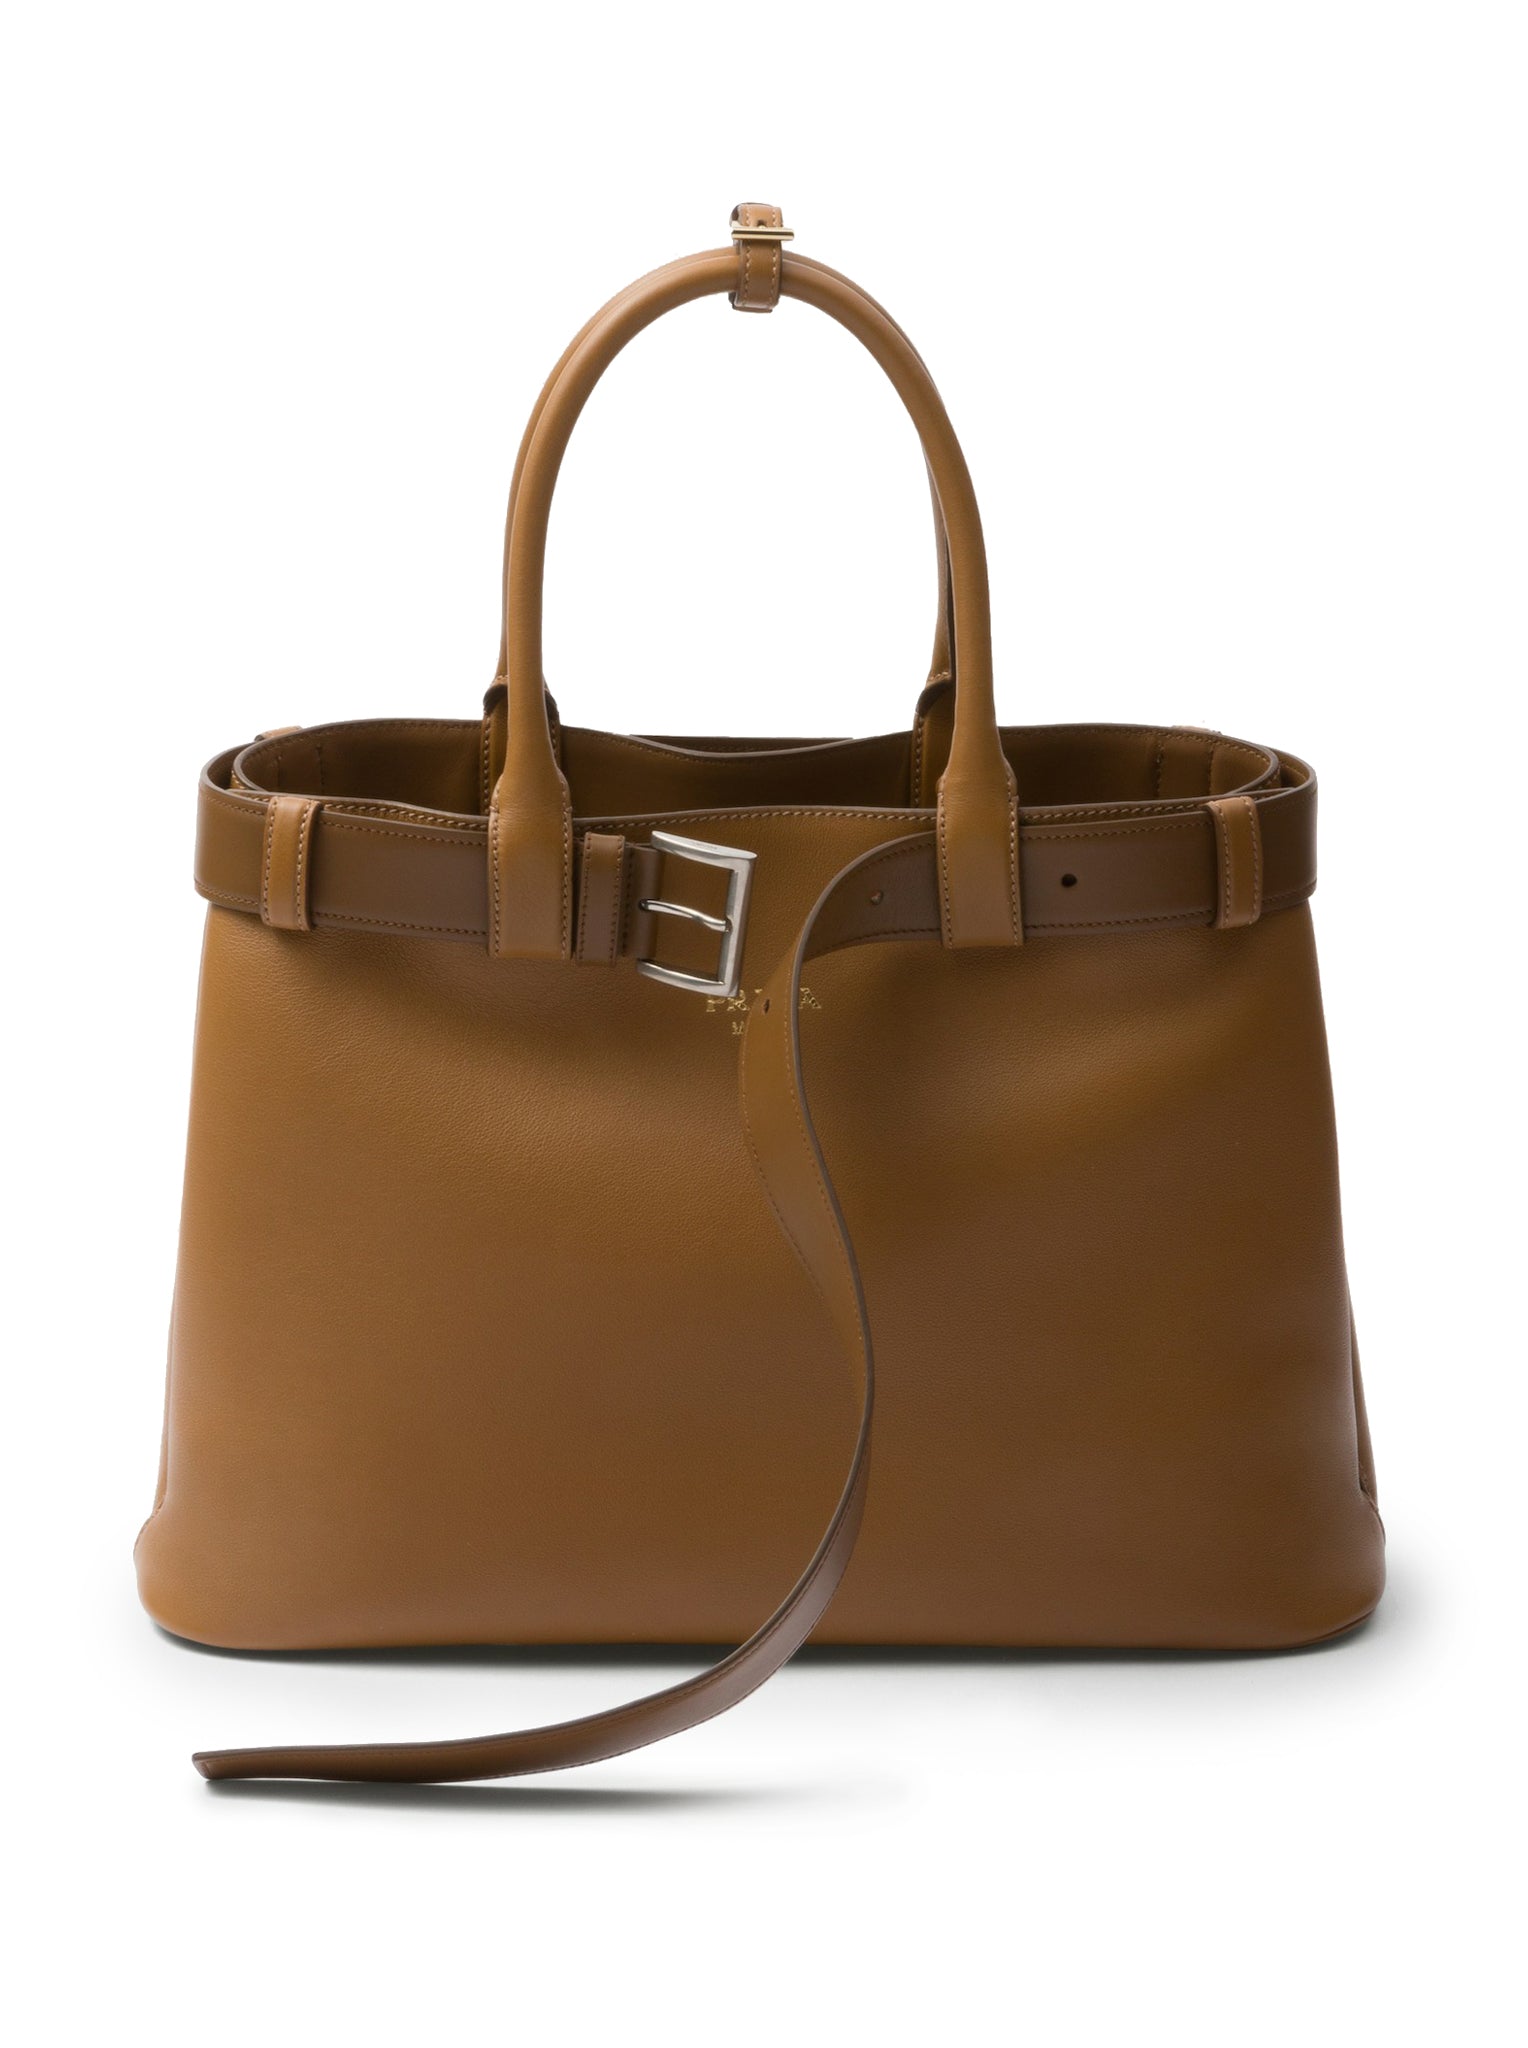 Prada Buckle large leather handbag